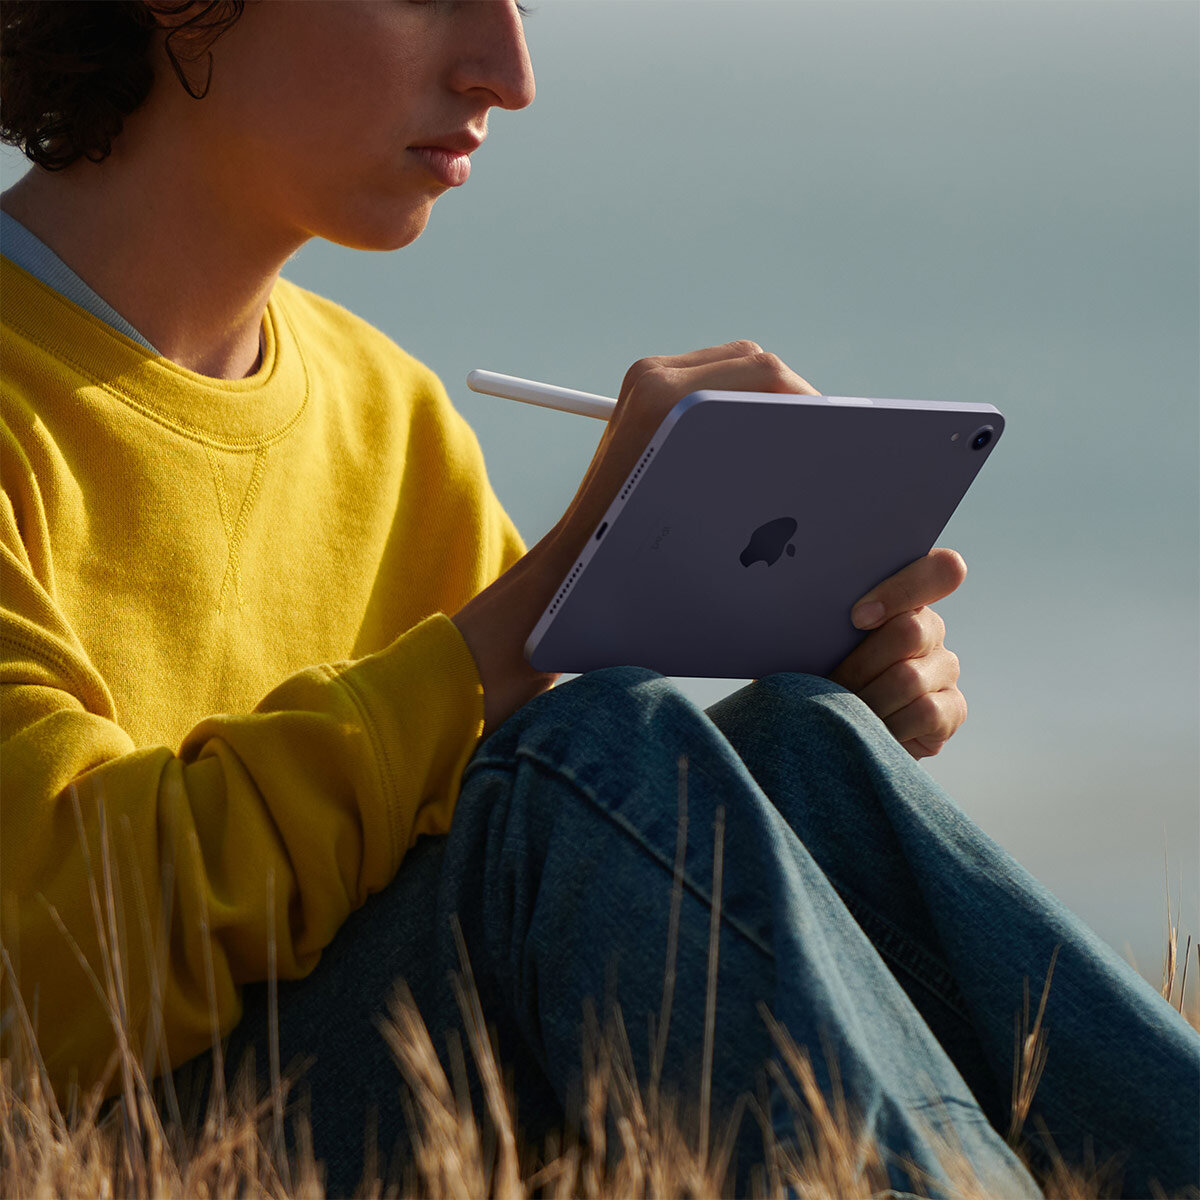 Buy Apple iPad mini 6th Gen, 8.3 Inch, WiFi, 256GB in Purple, MK7X3B/A at costco.co.uk